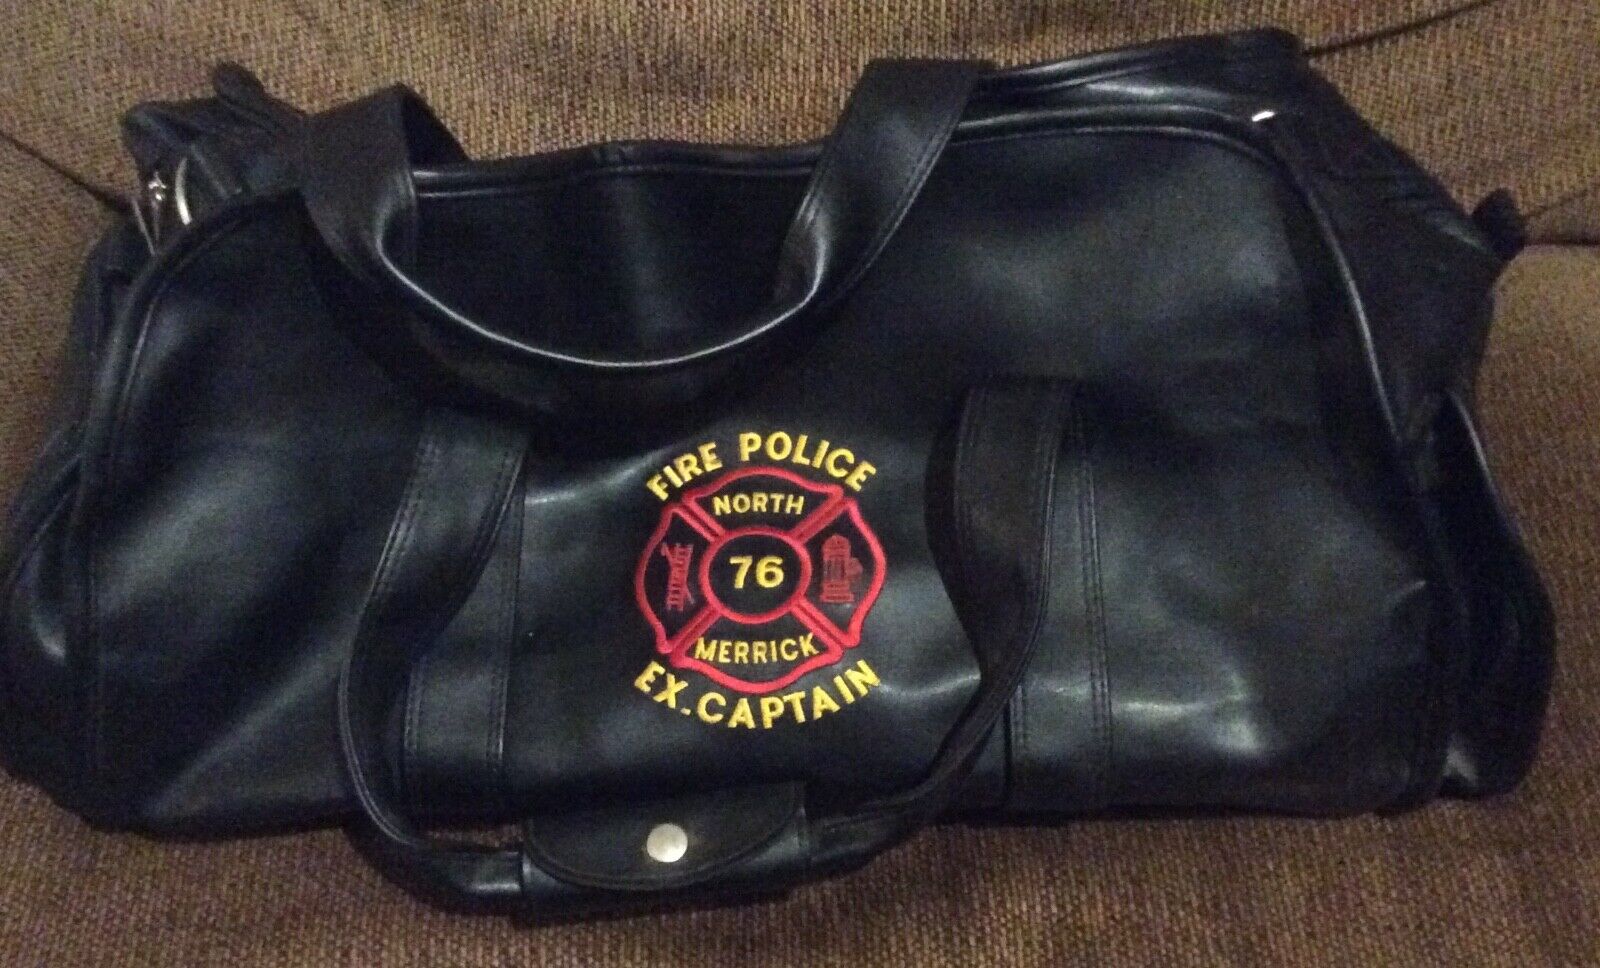 Fire Police Duffle / Utility / Gear Bag - Ex. Captain - Merrick, Ny